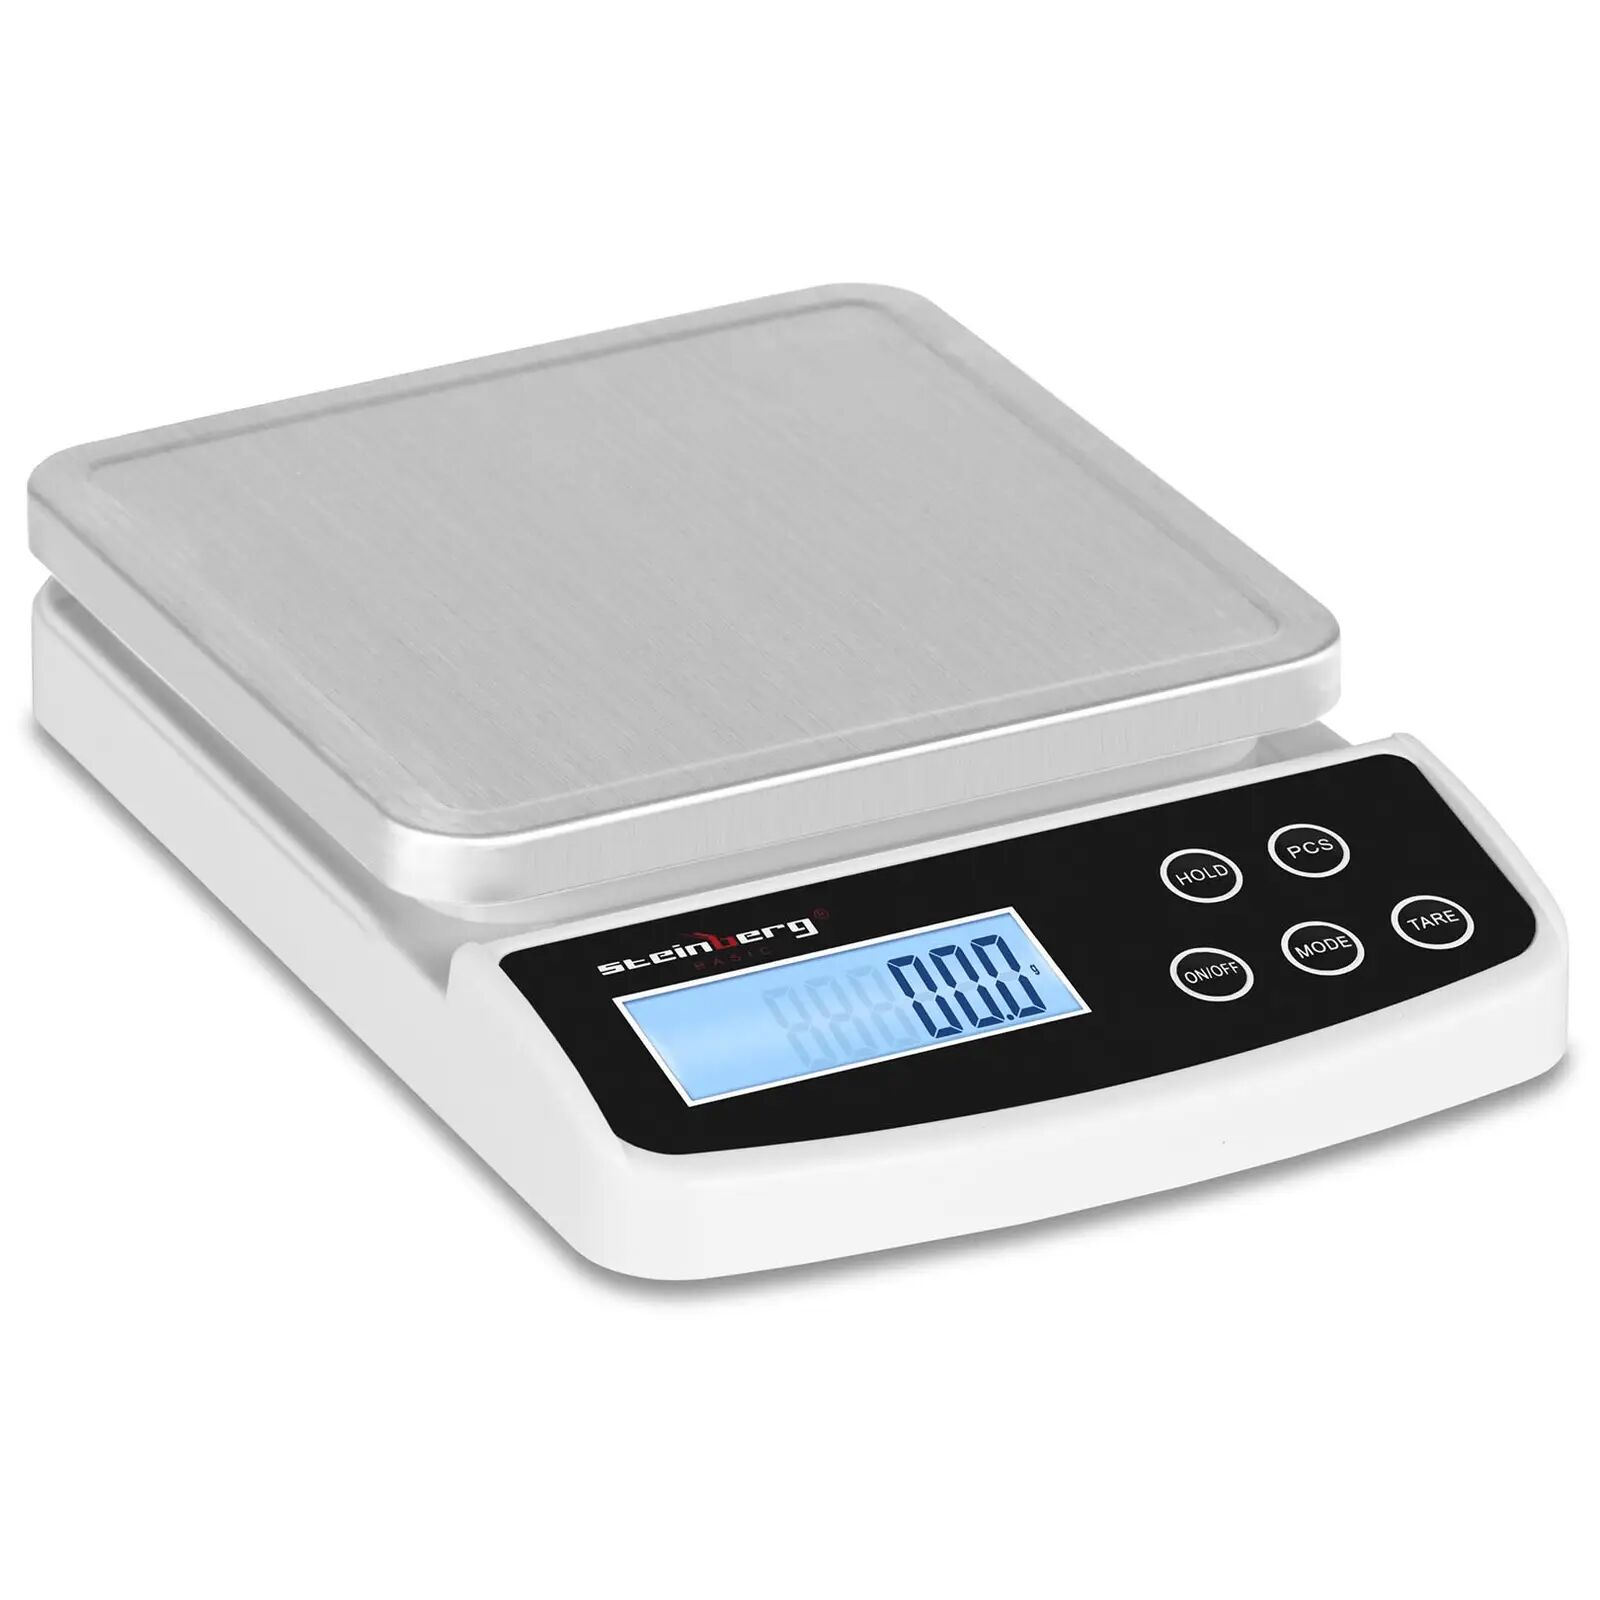 Steinberg Balanza pesacartas digital - 5 kg / 0,1 g - Basic 10030139